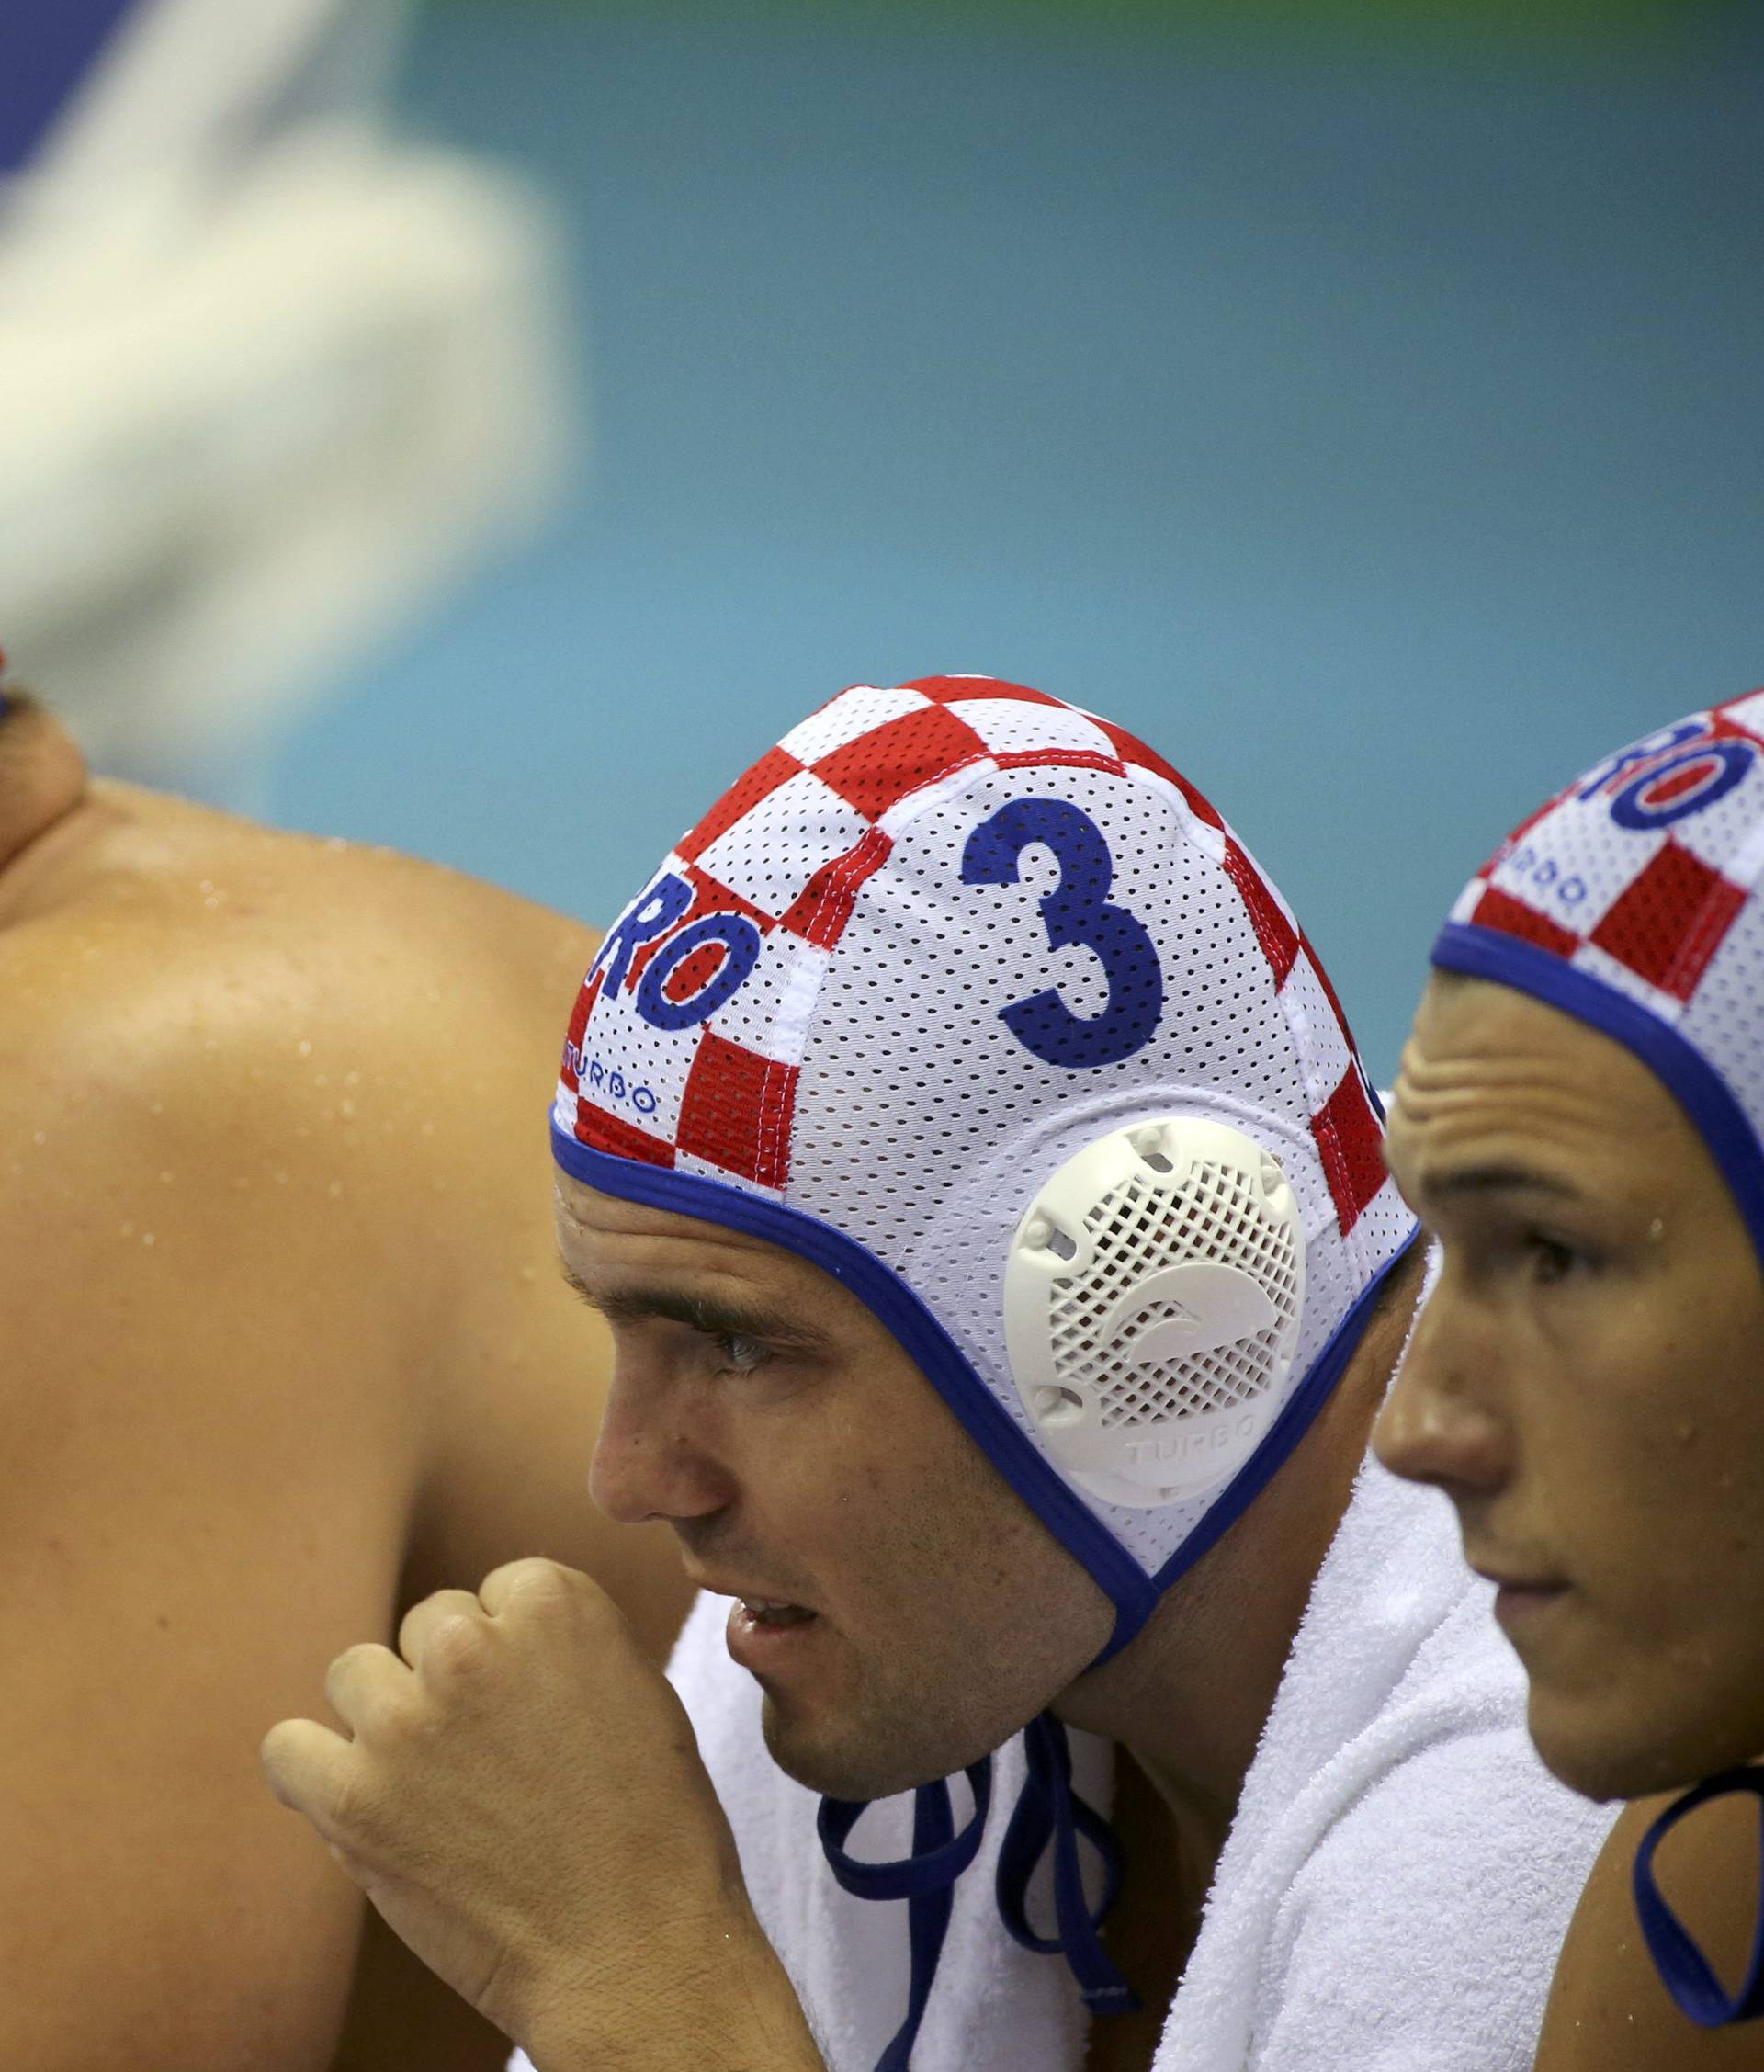 Water Polo - Men's Gold Medal Match Croatia v Serbia